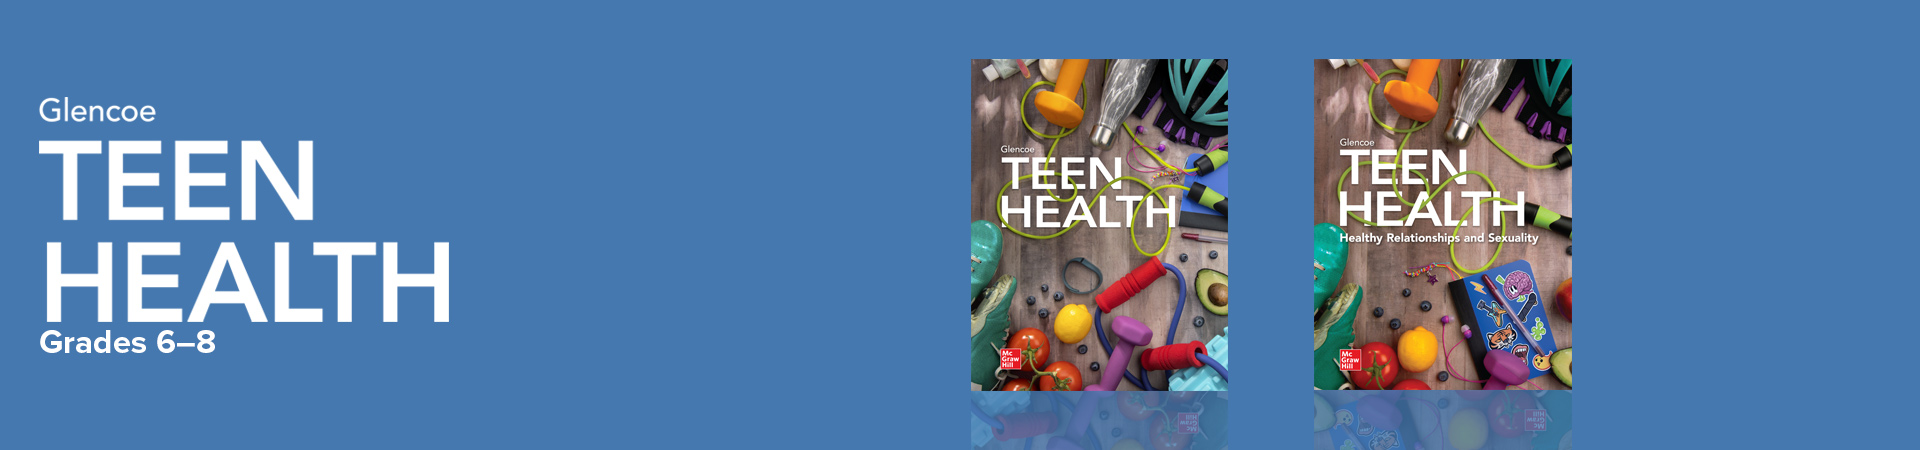 Glencoe Teen Health logo and covers